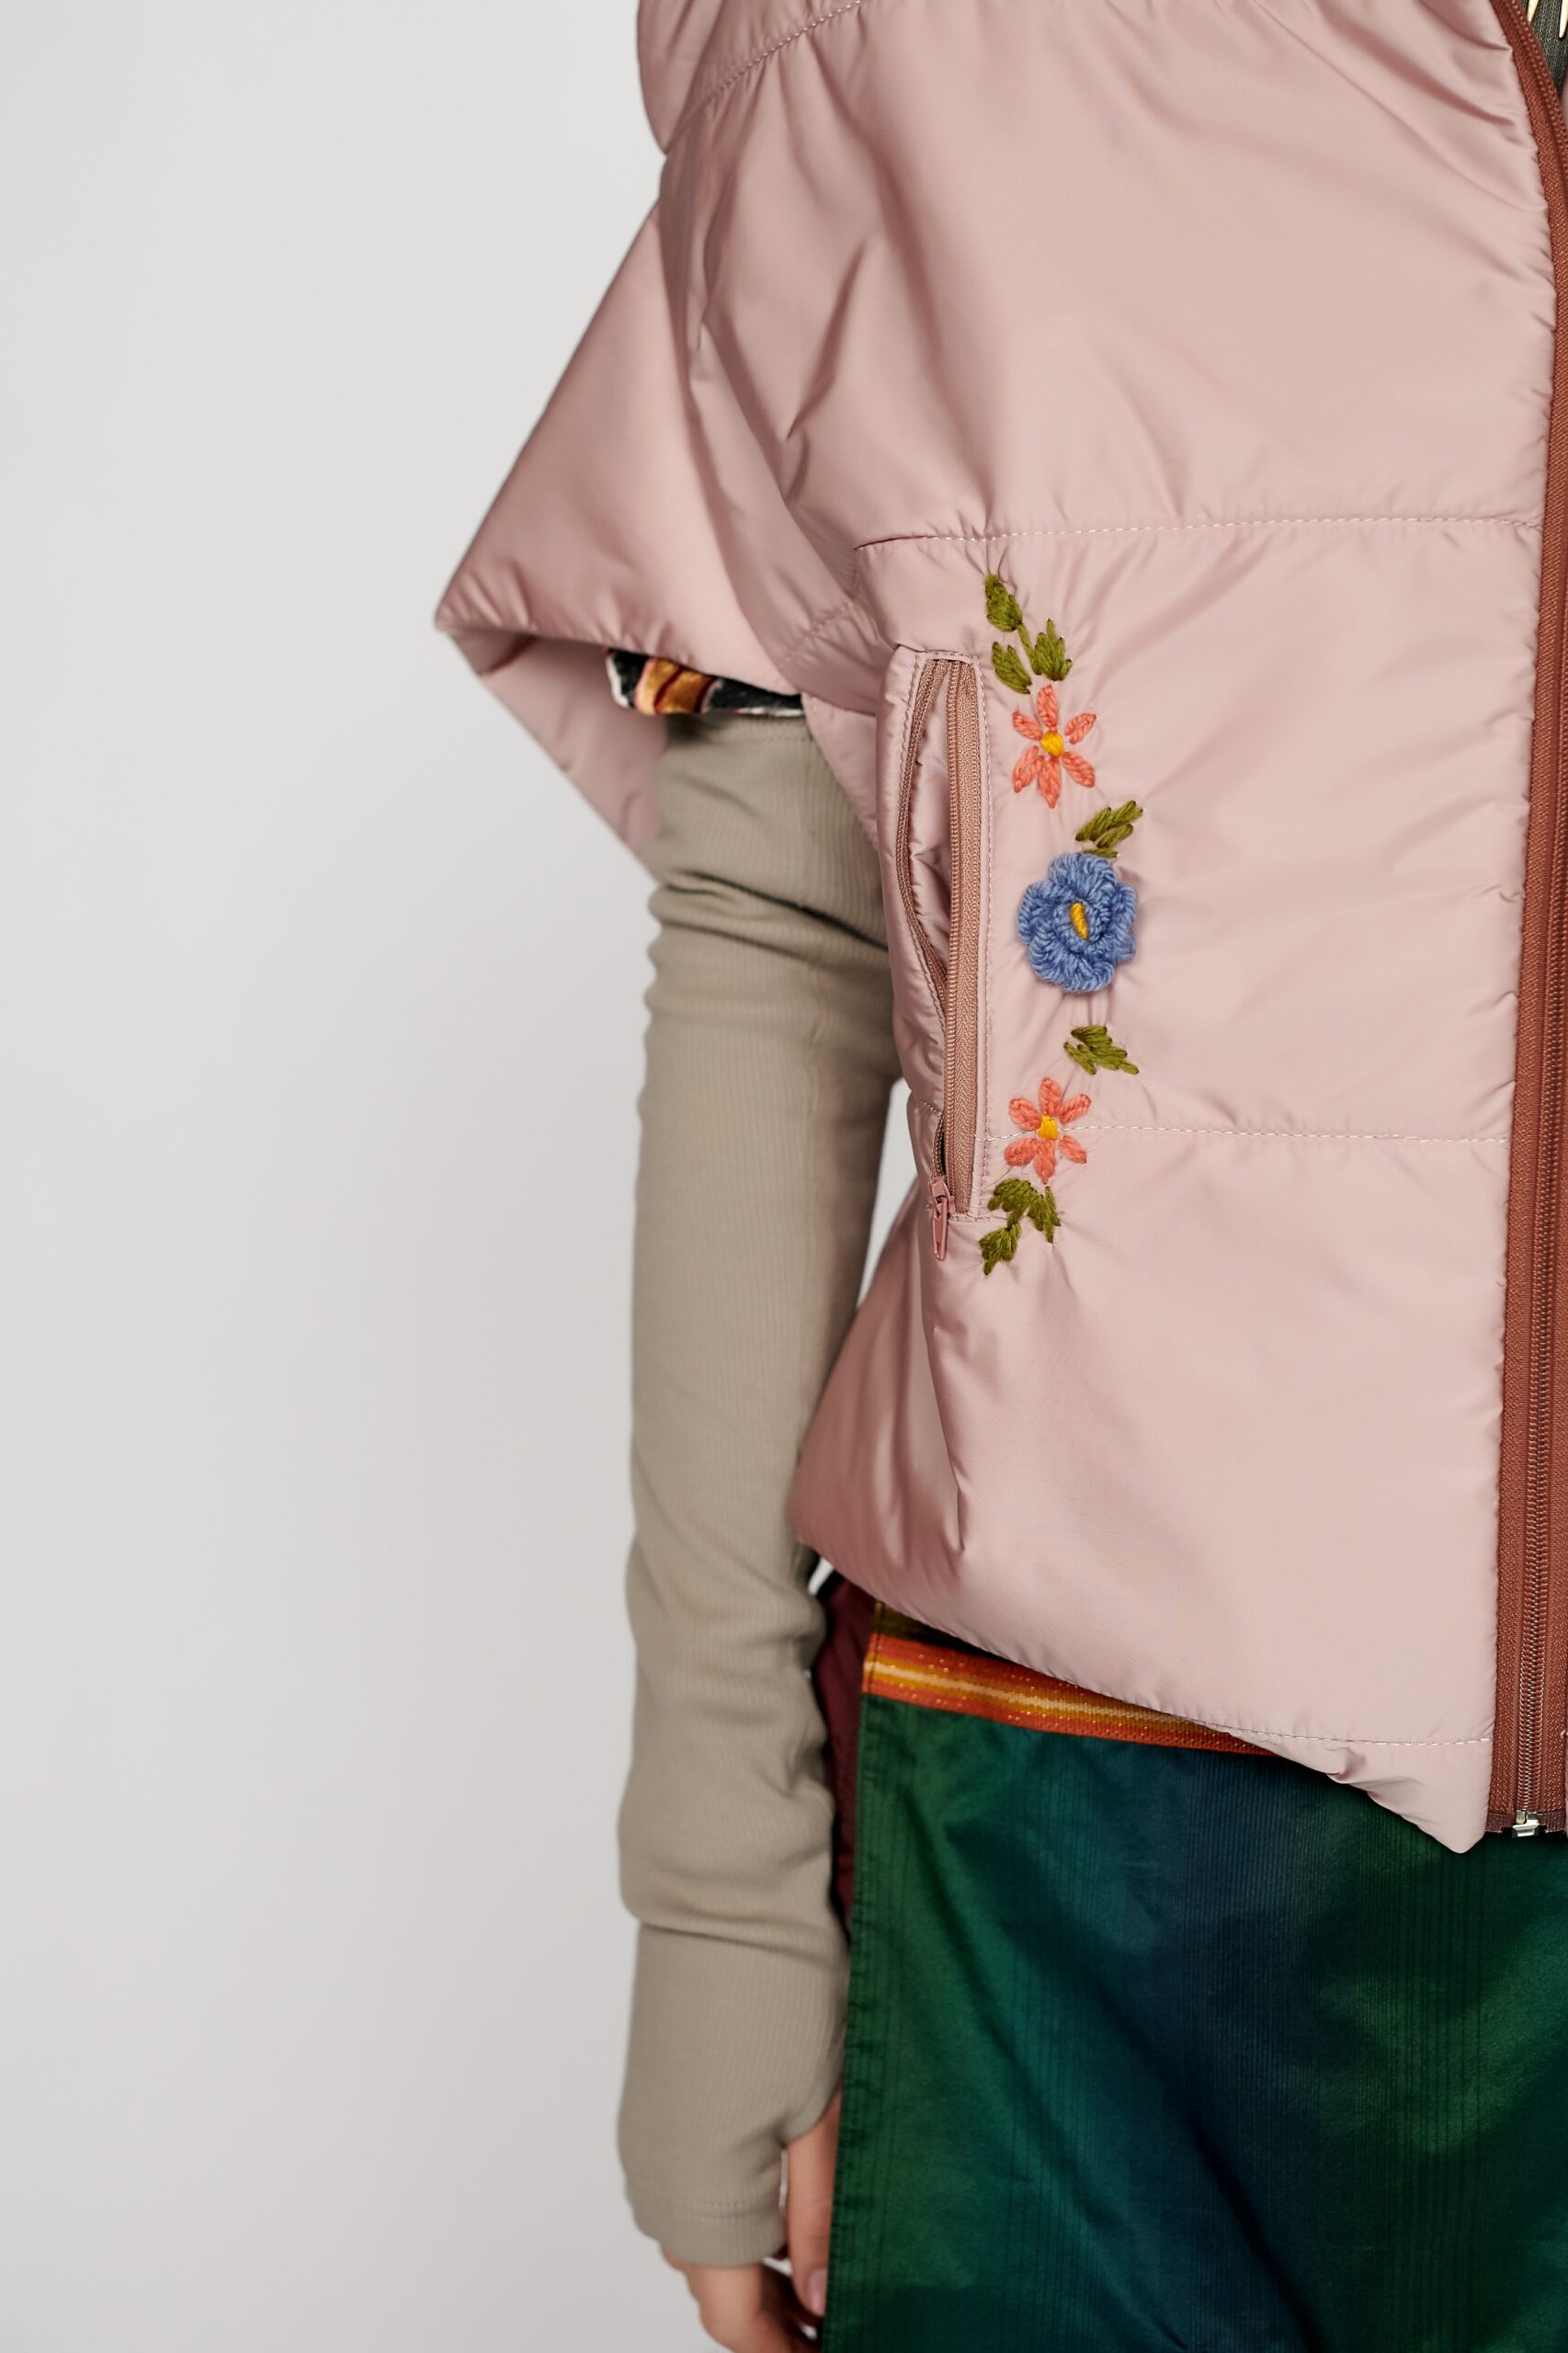 Jacket RUBEN RO. Natural fabrics, original design, handmade embroidery